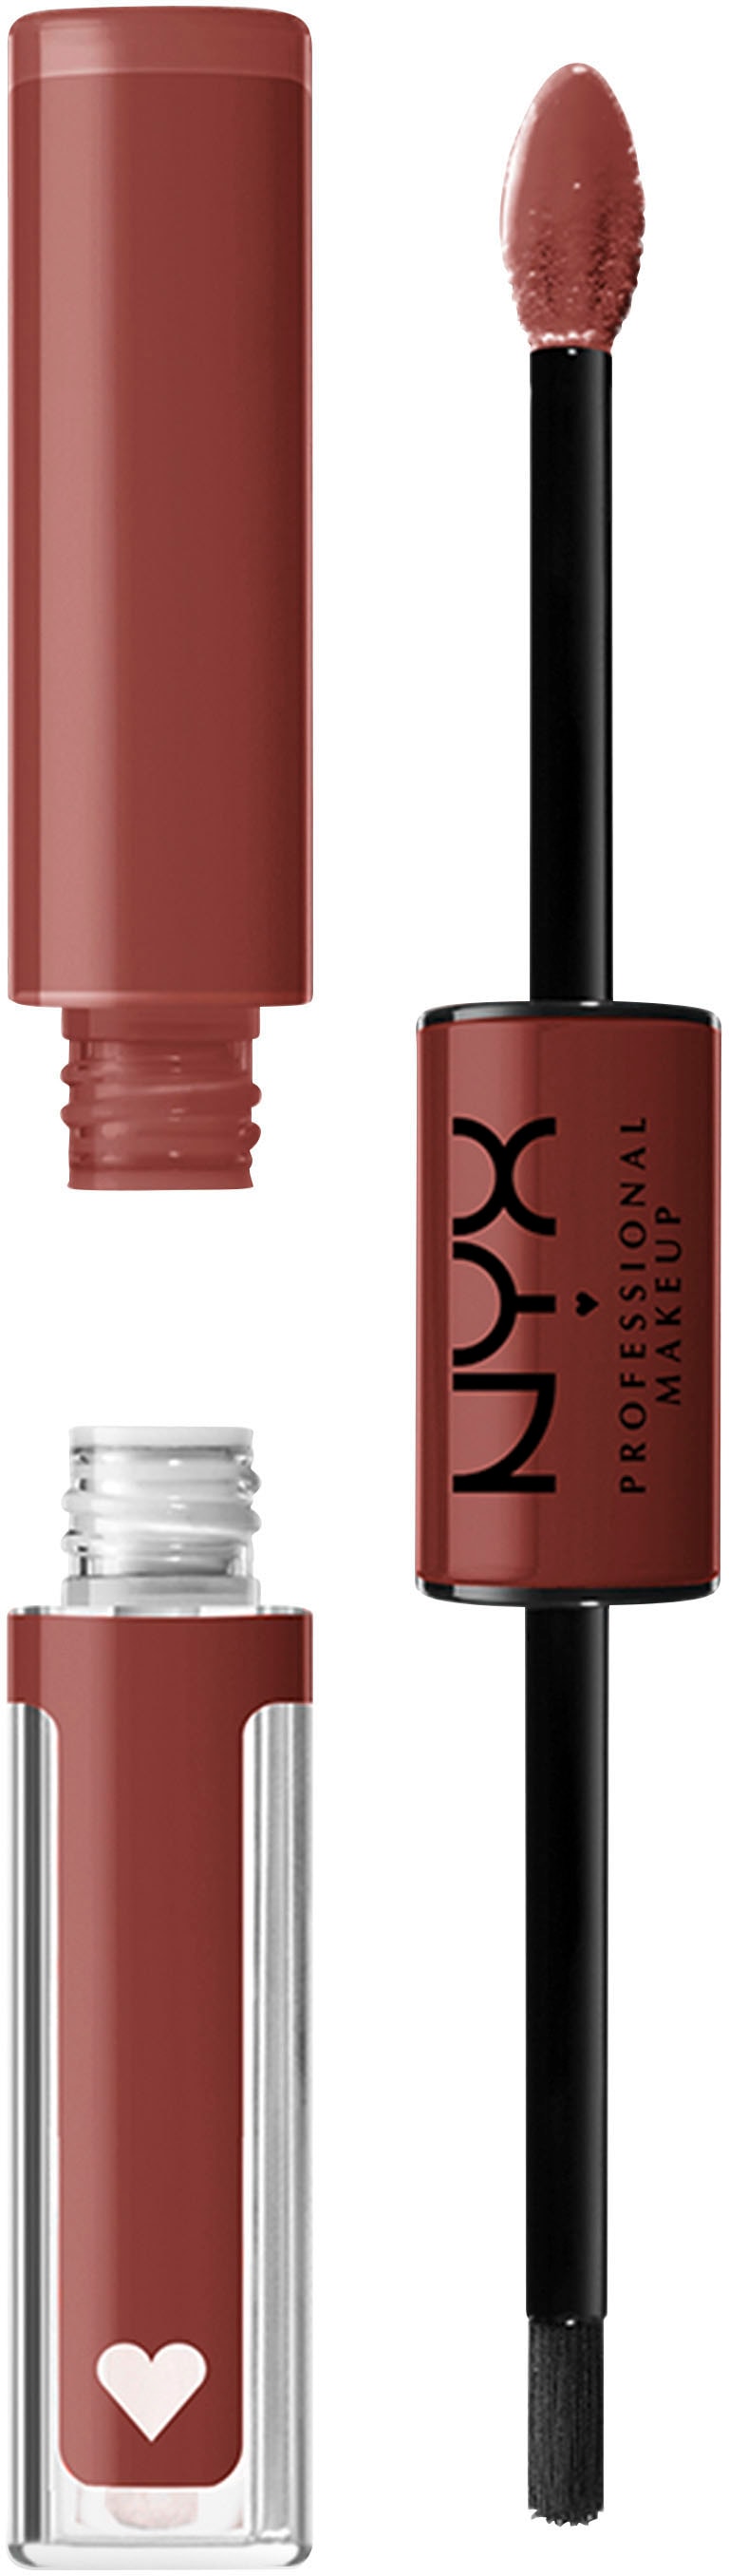 NYX Lippenstift »Professional Makeup Shine Loud High Pigment Lip Shine«, präziser Auftrag mit geformtem Applikator